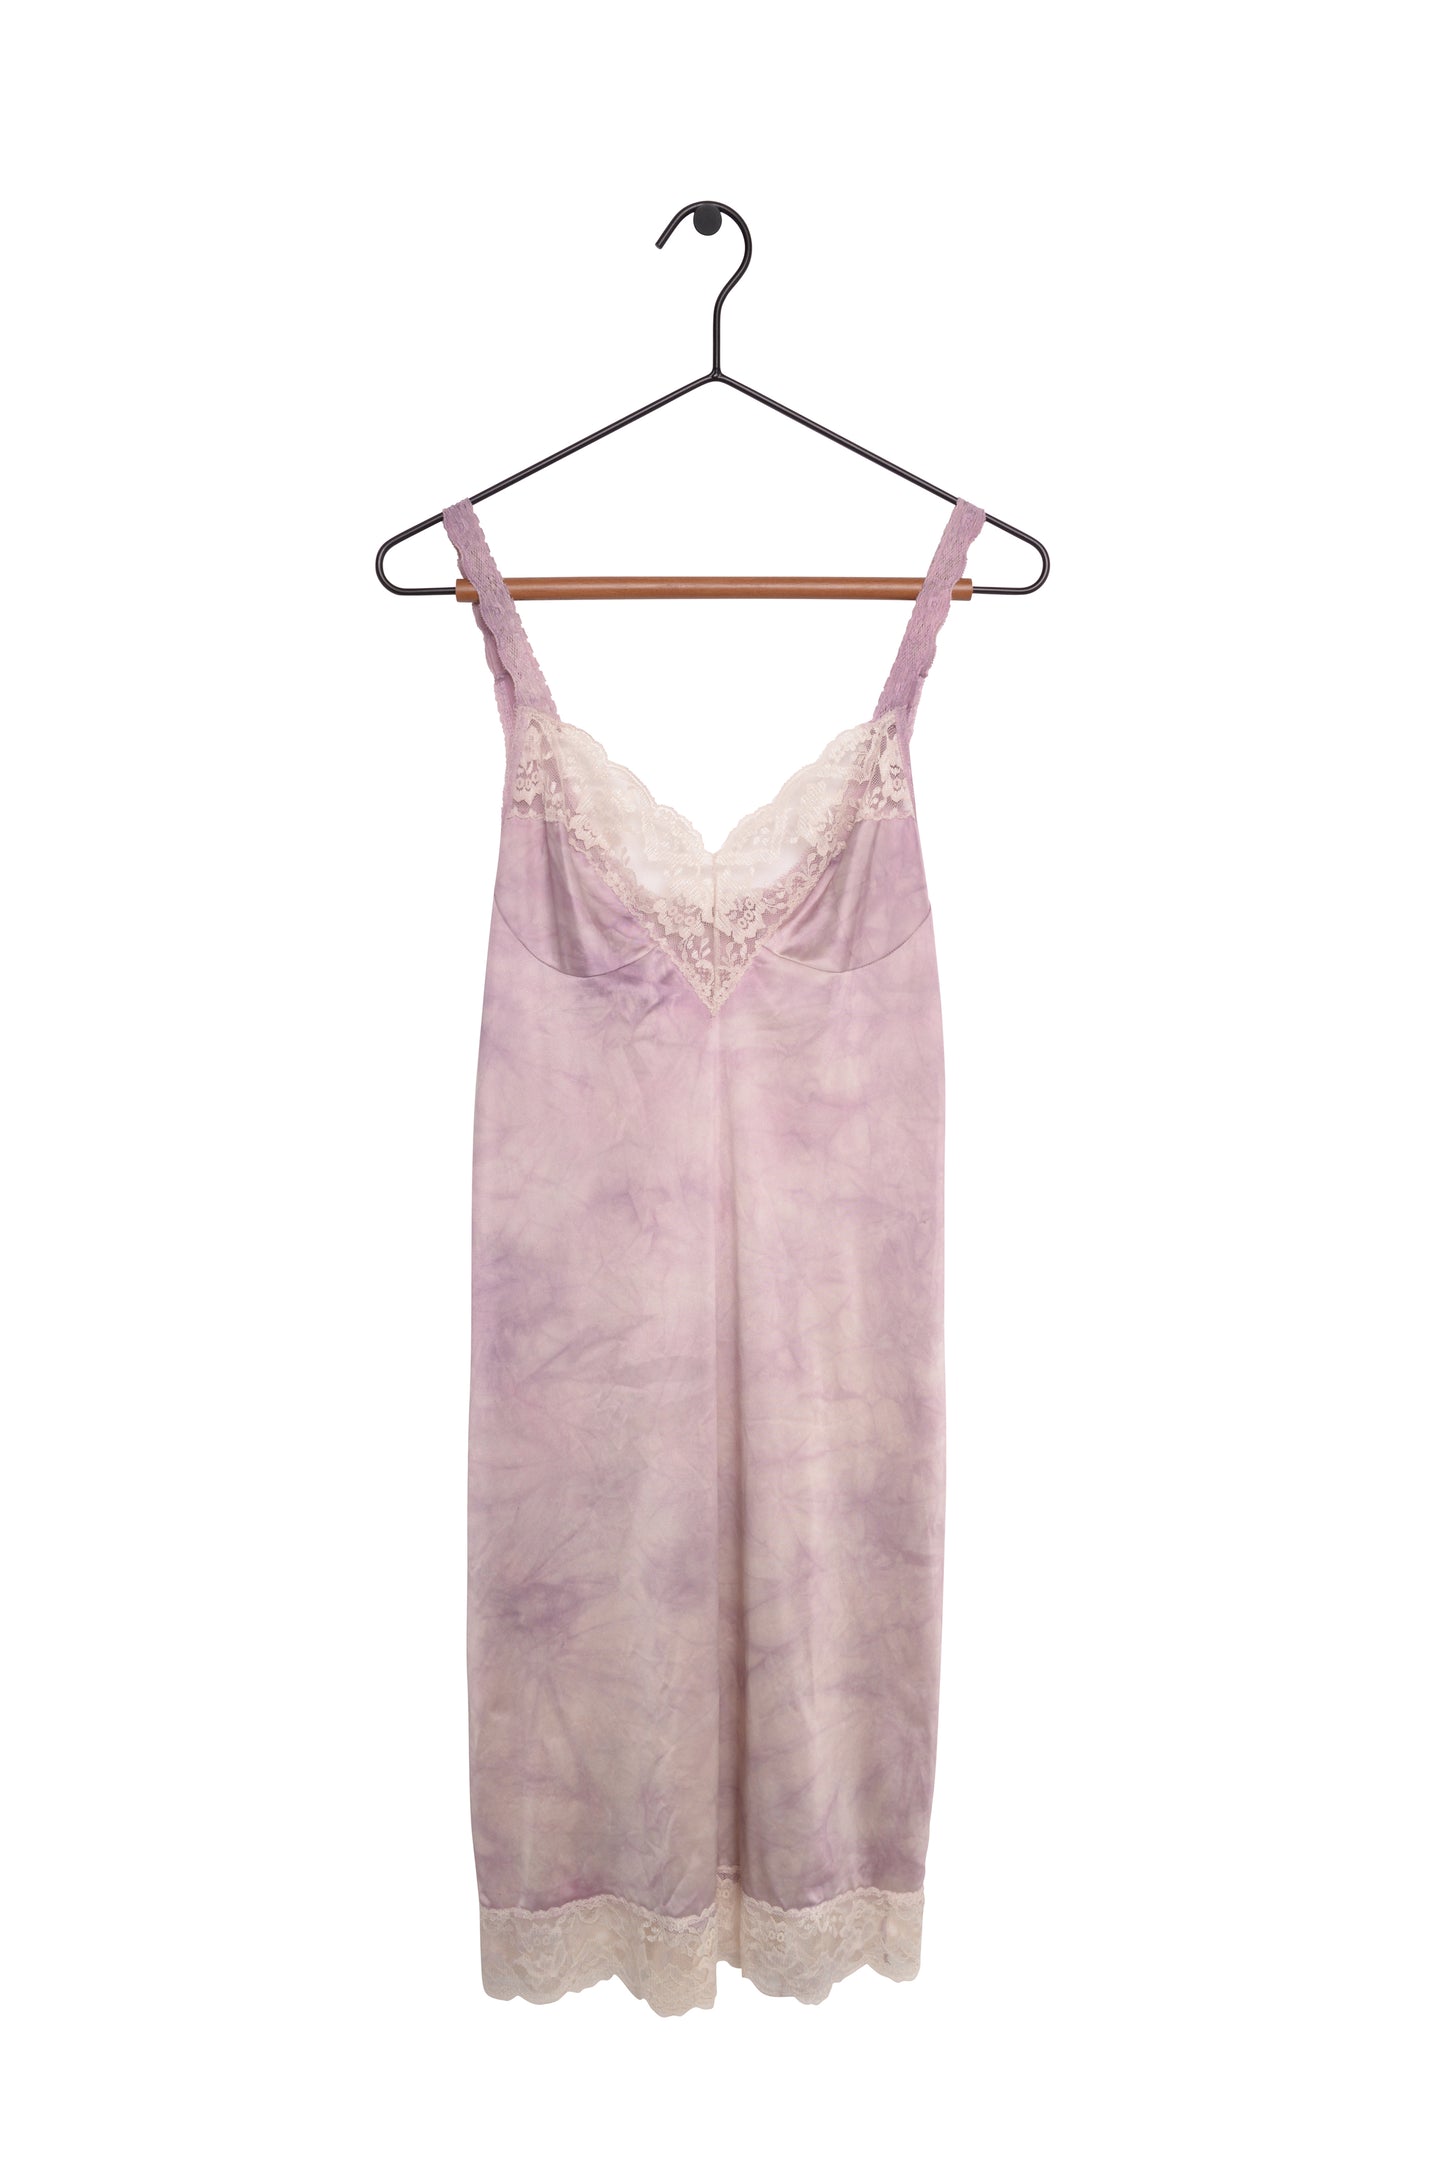 Hand-Dyed Lace Trim Slip Dress USA